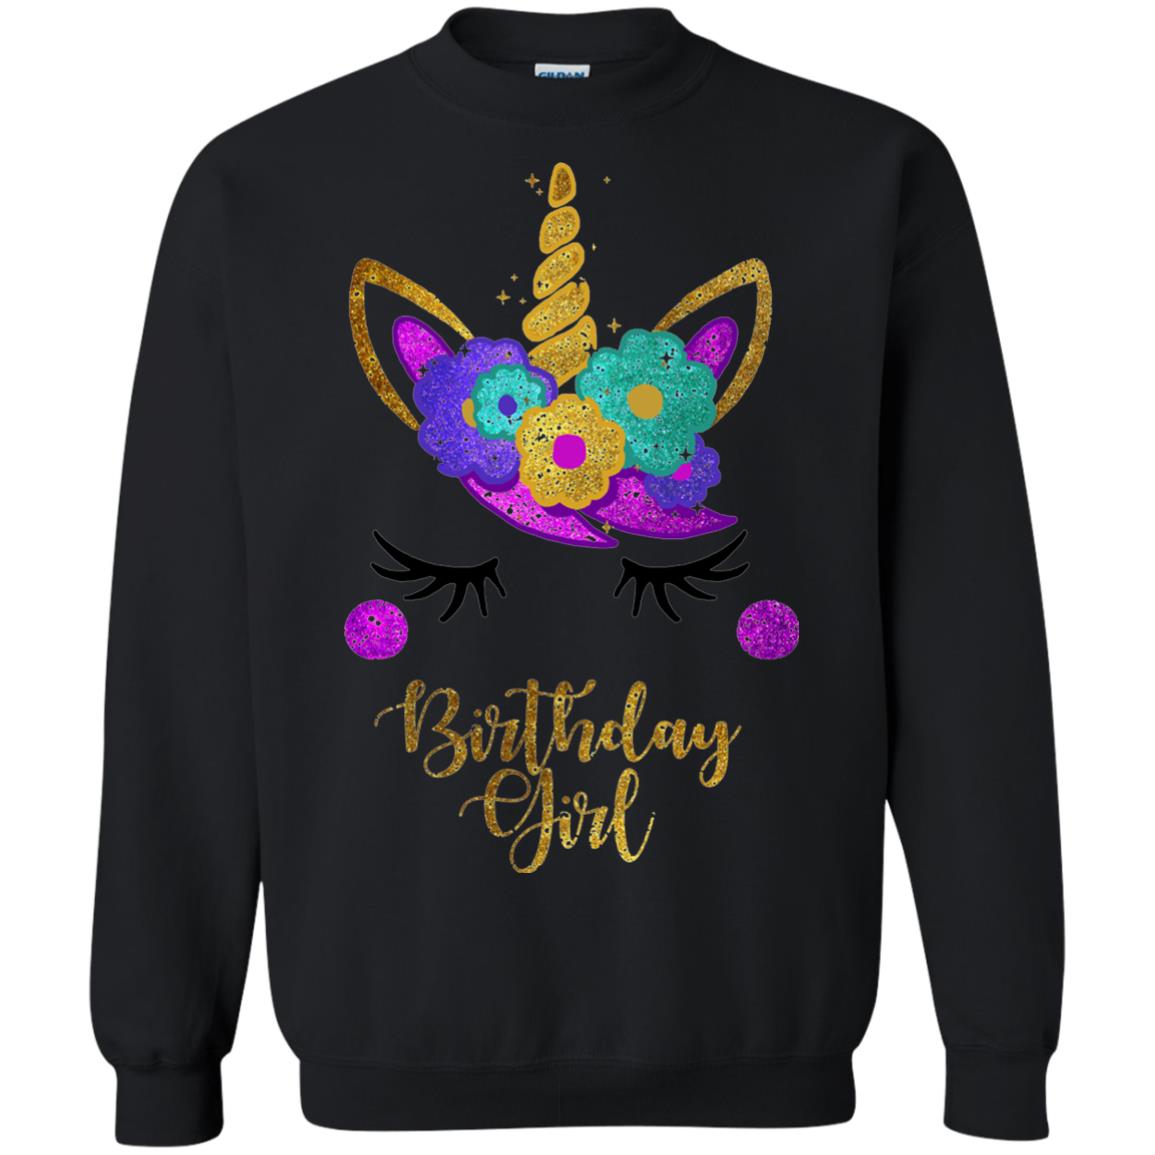 Unicorn Birthday Girl T-shirt